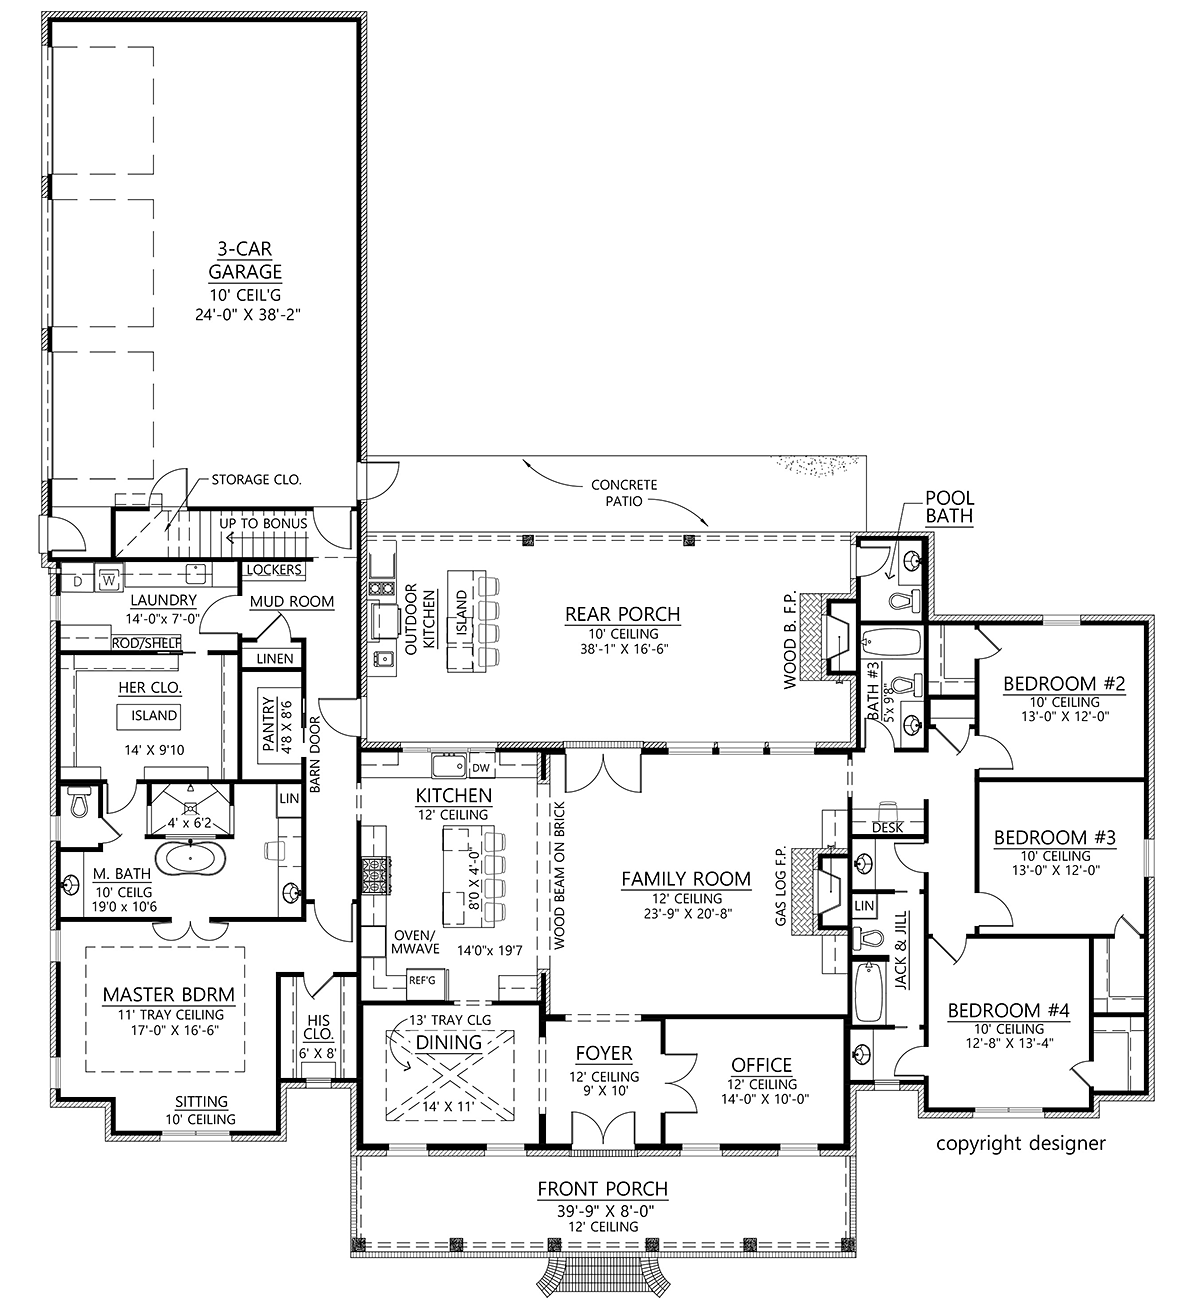 House Plan 41415 Alternate Level One